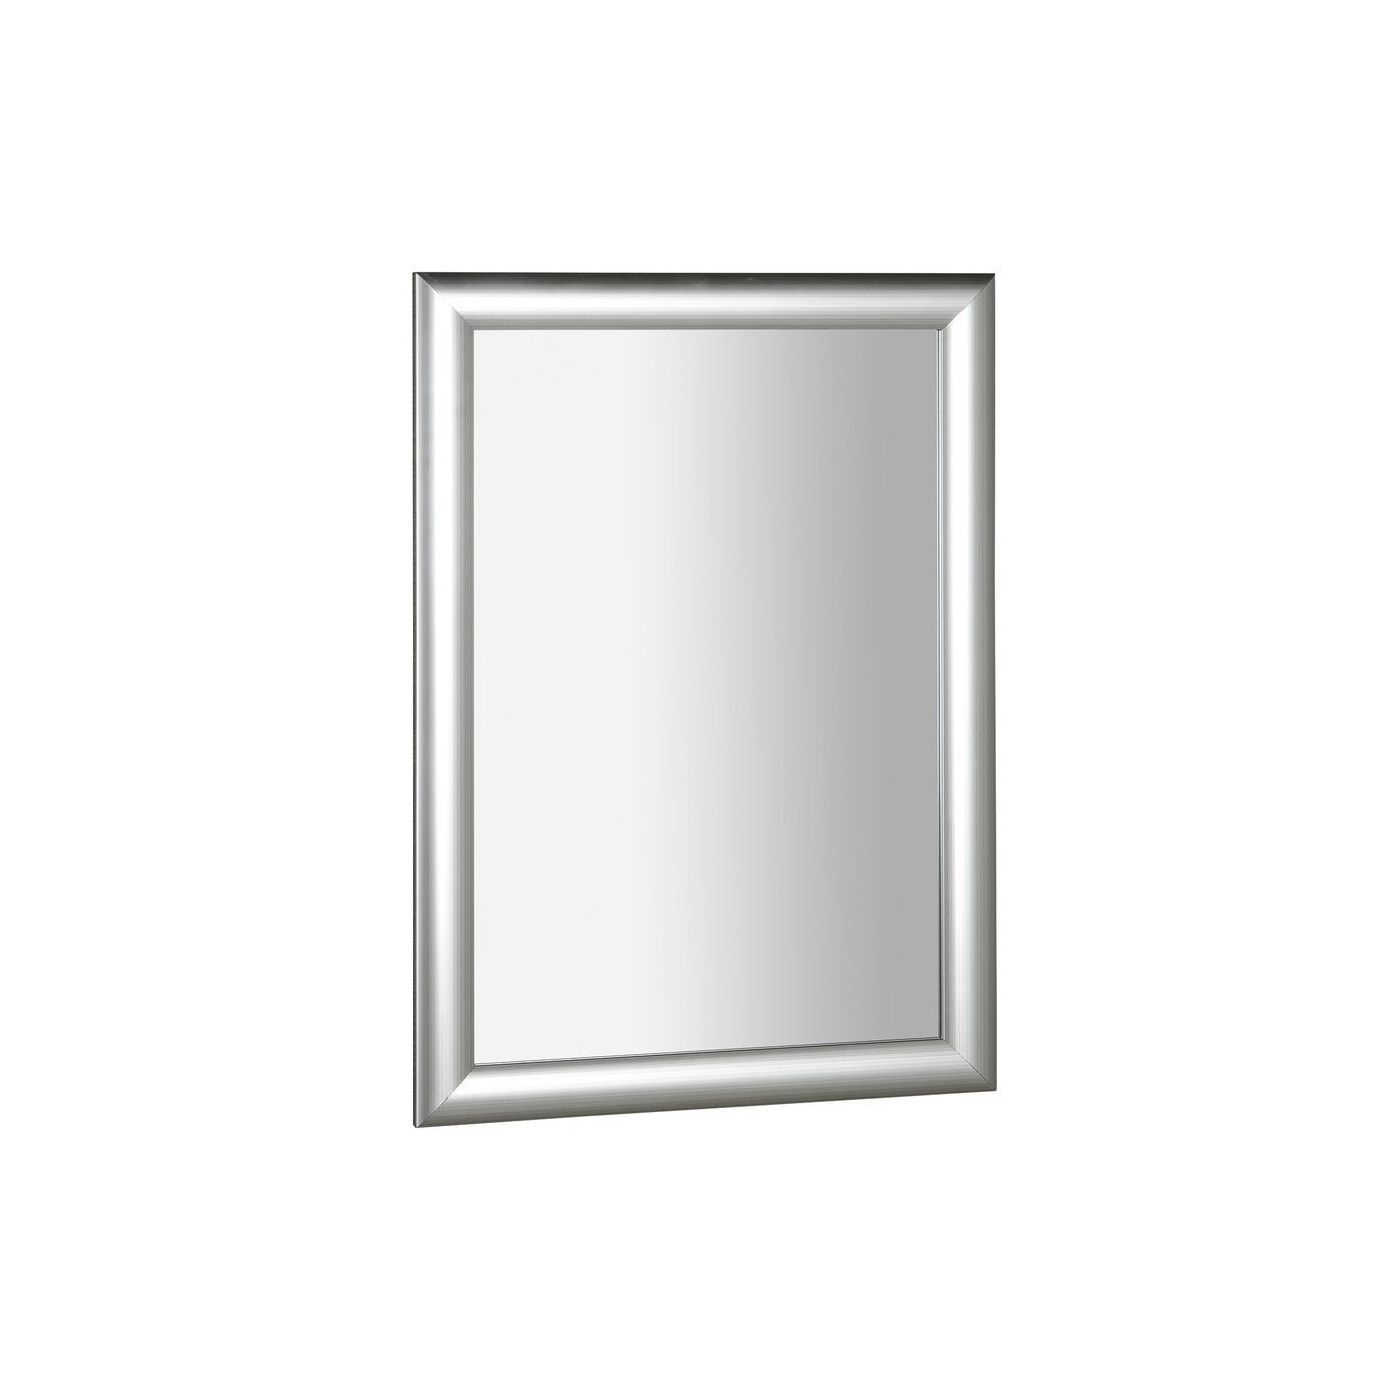 Esta Spiegel 580x780mm in houten frame zilver met streep